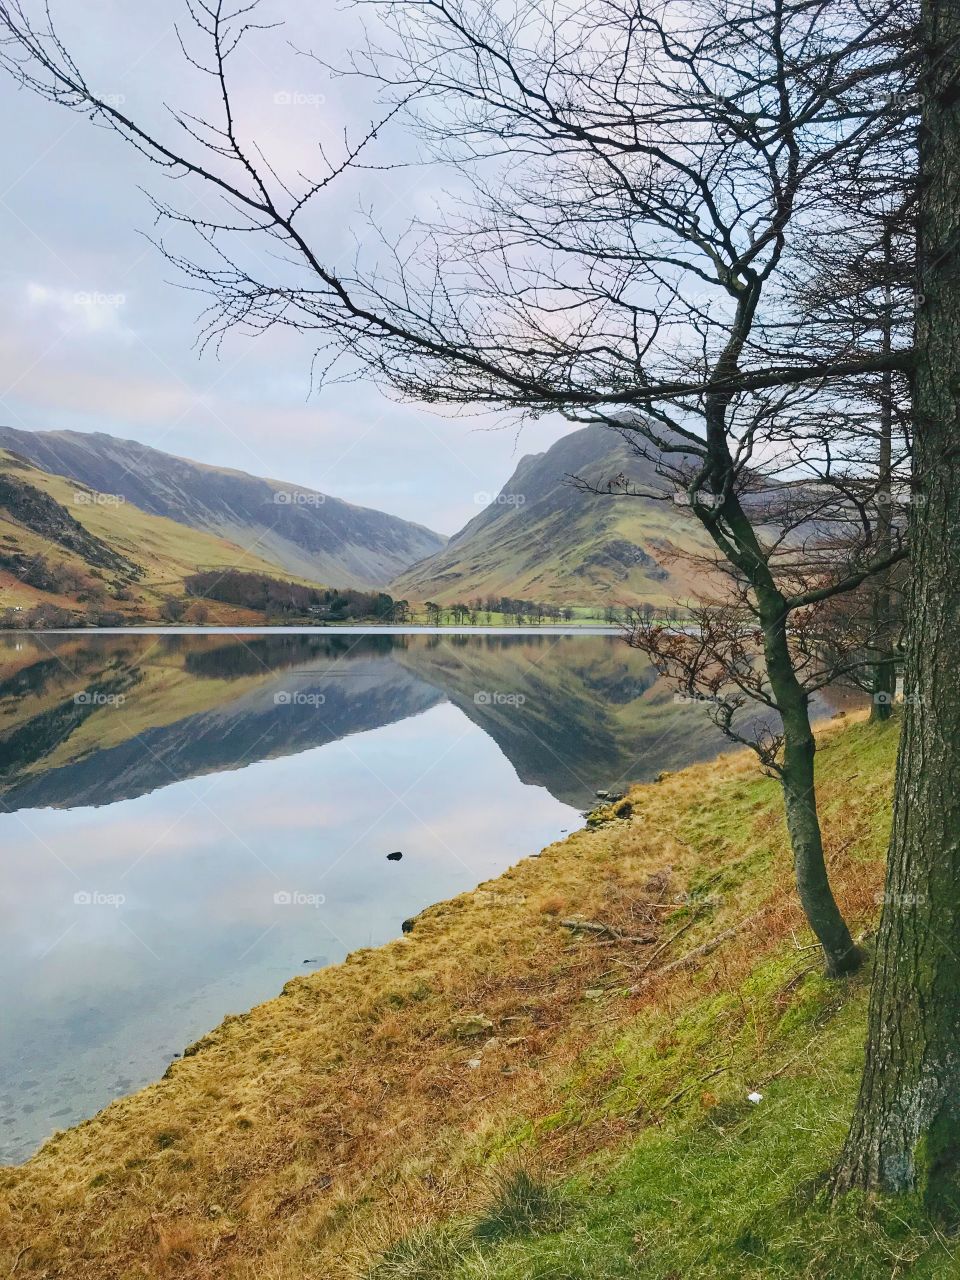 Mirrored Cumbrian lake